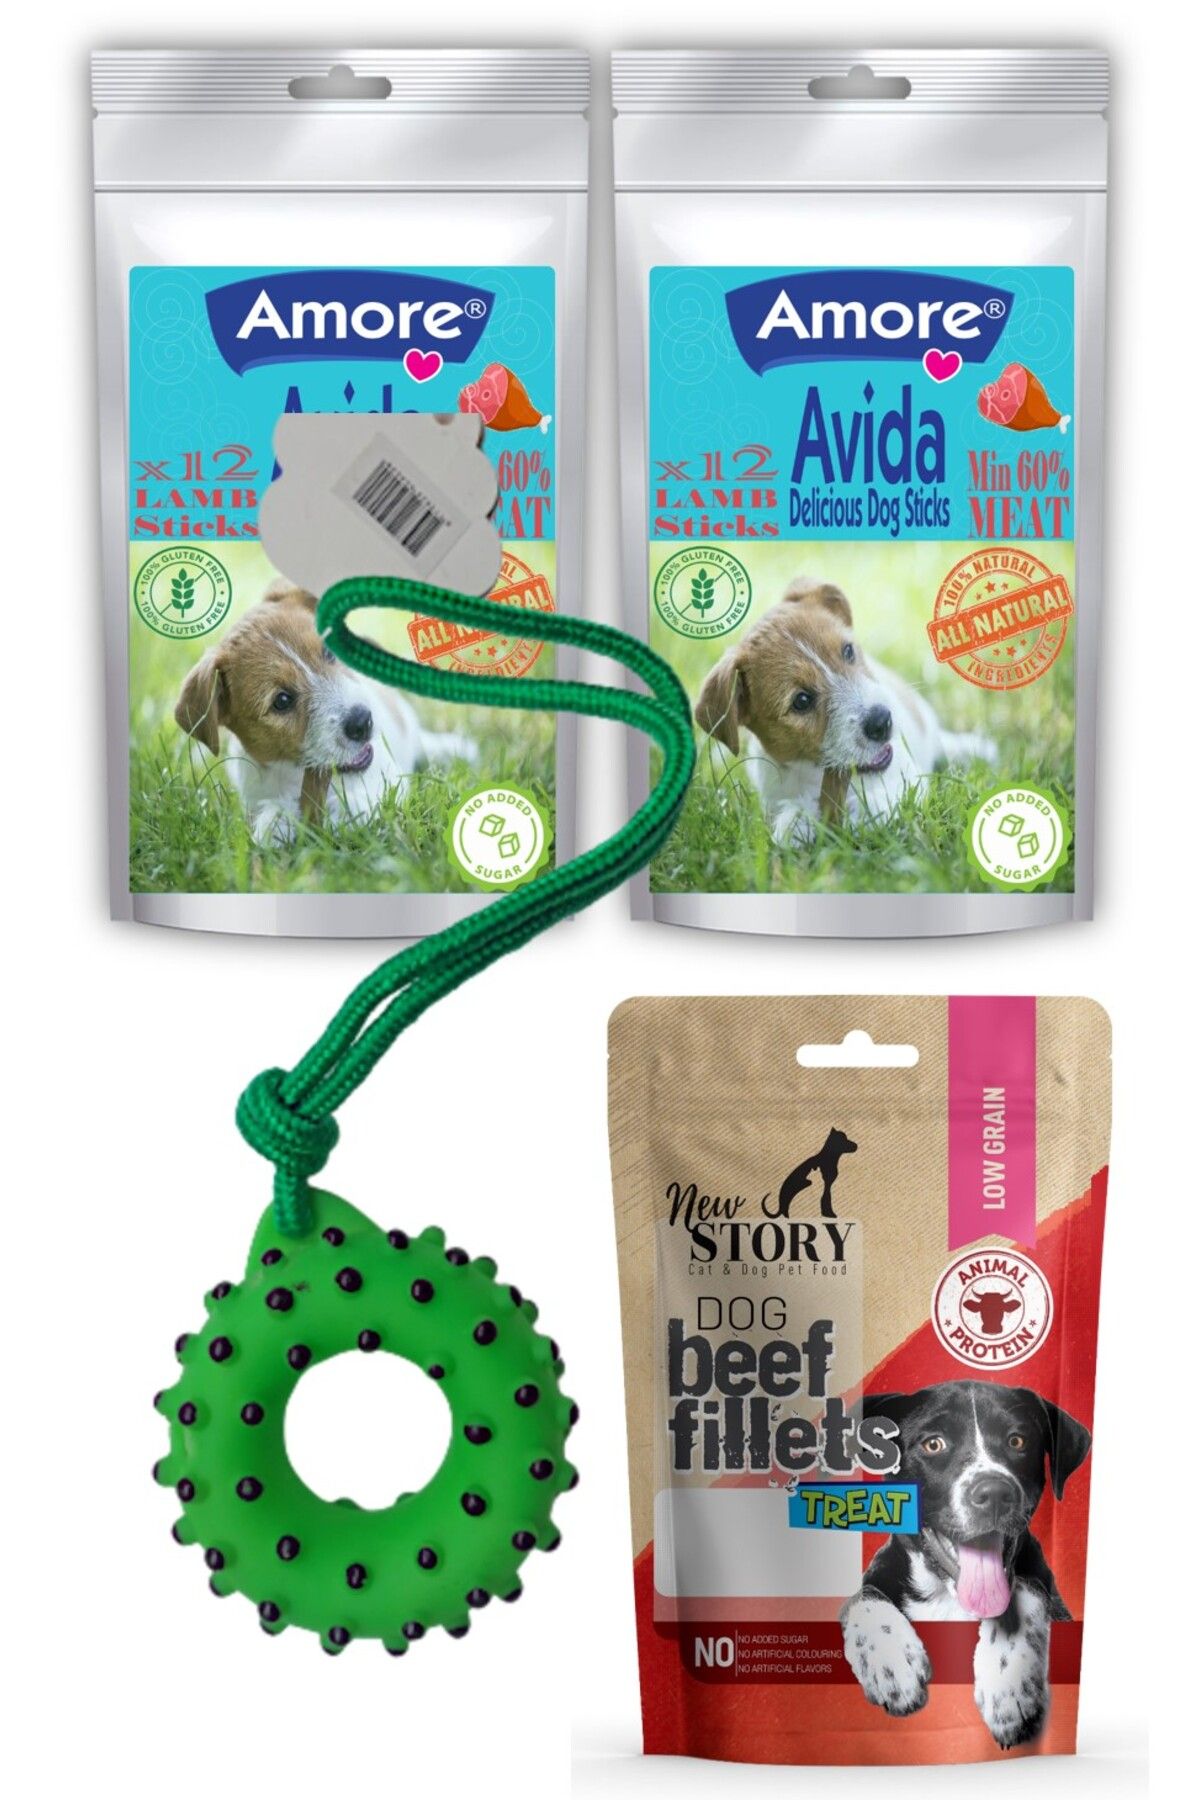 Amoredog Avida Dog Lamb 2 Paket 12li Kuzu Etli Sticks, Beef Fillets 80gr, Yoyo Yeşil Köpek Oyuncağı